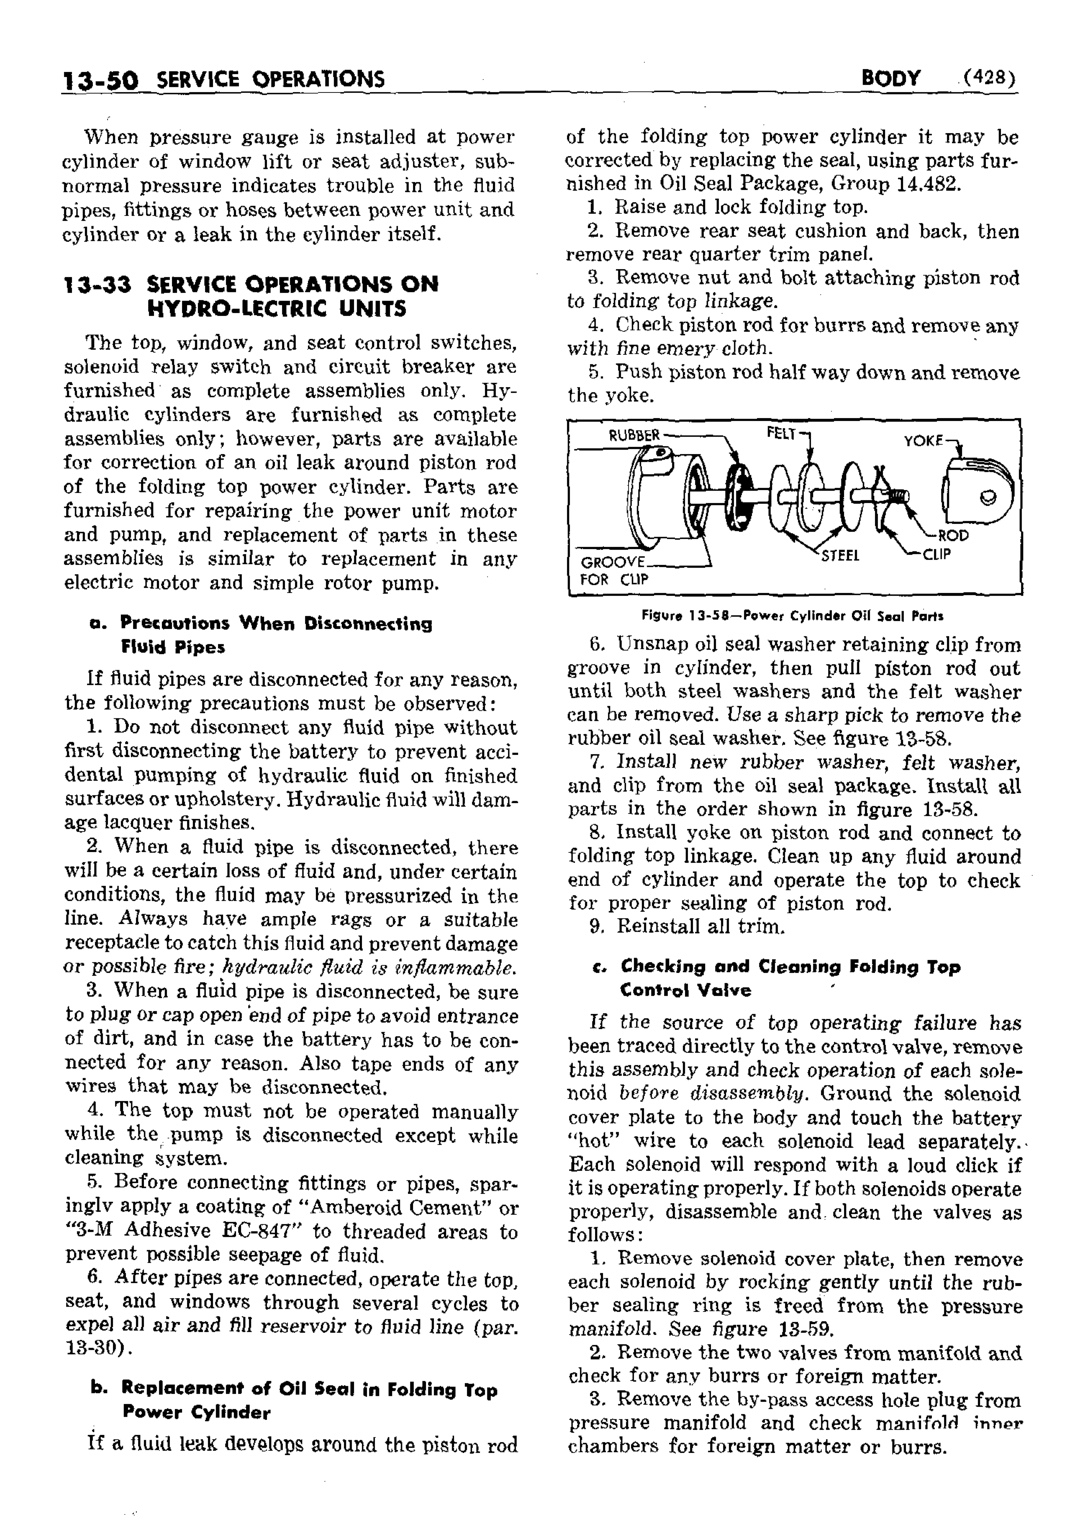 n_14 1950 Buick Shop Manual - Body-050-050.jpg